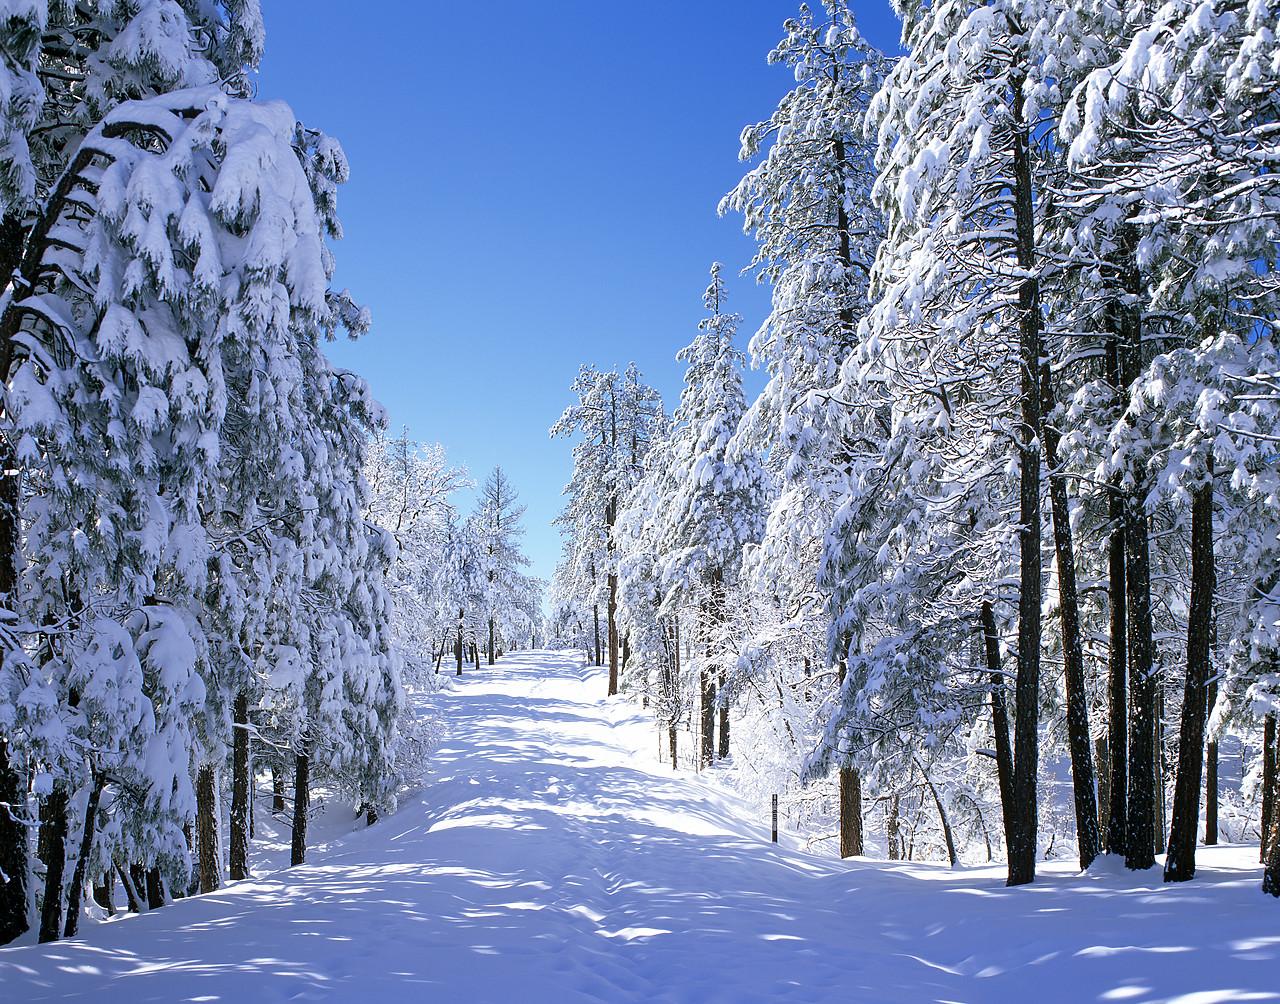 #980586-1 - Snow Covered Road & Pine Trees, Flagstaff, Arizona, USA